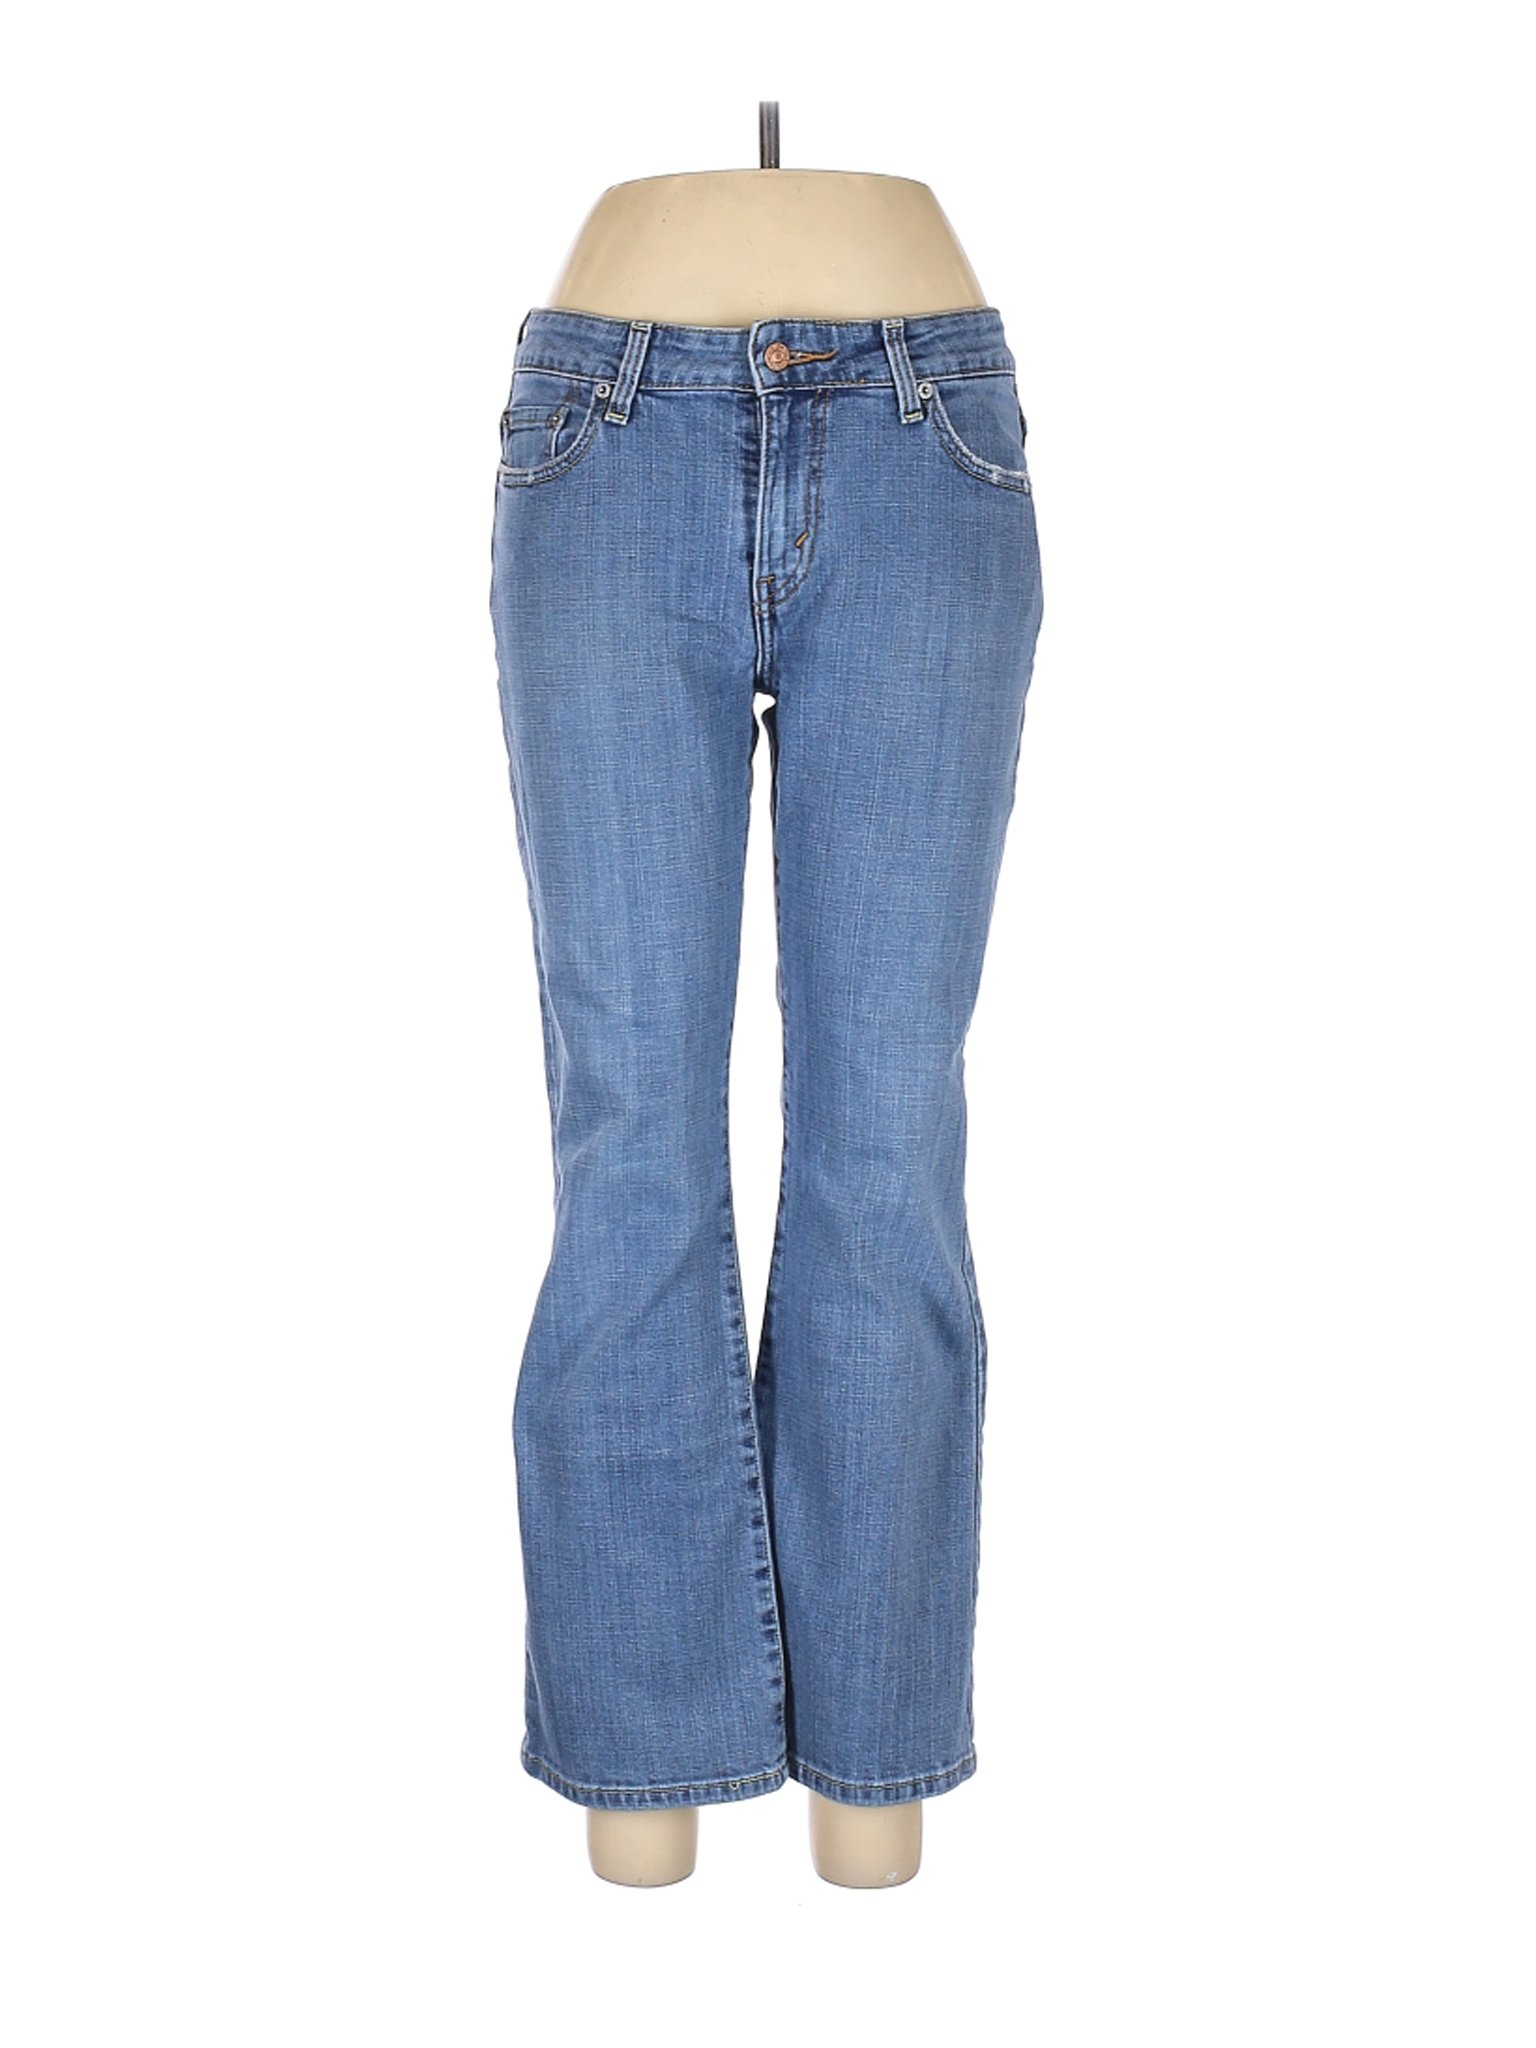 Levi's Women Blue Jeans 10 Petites | eBay